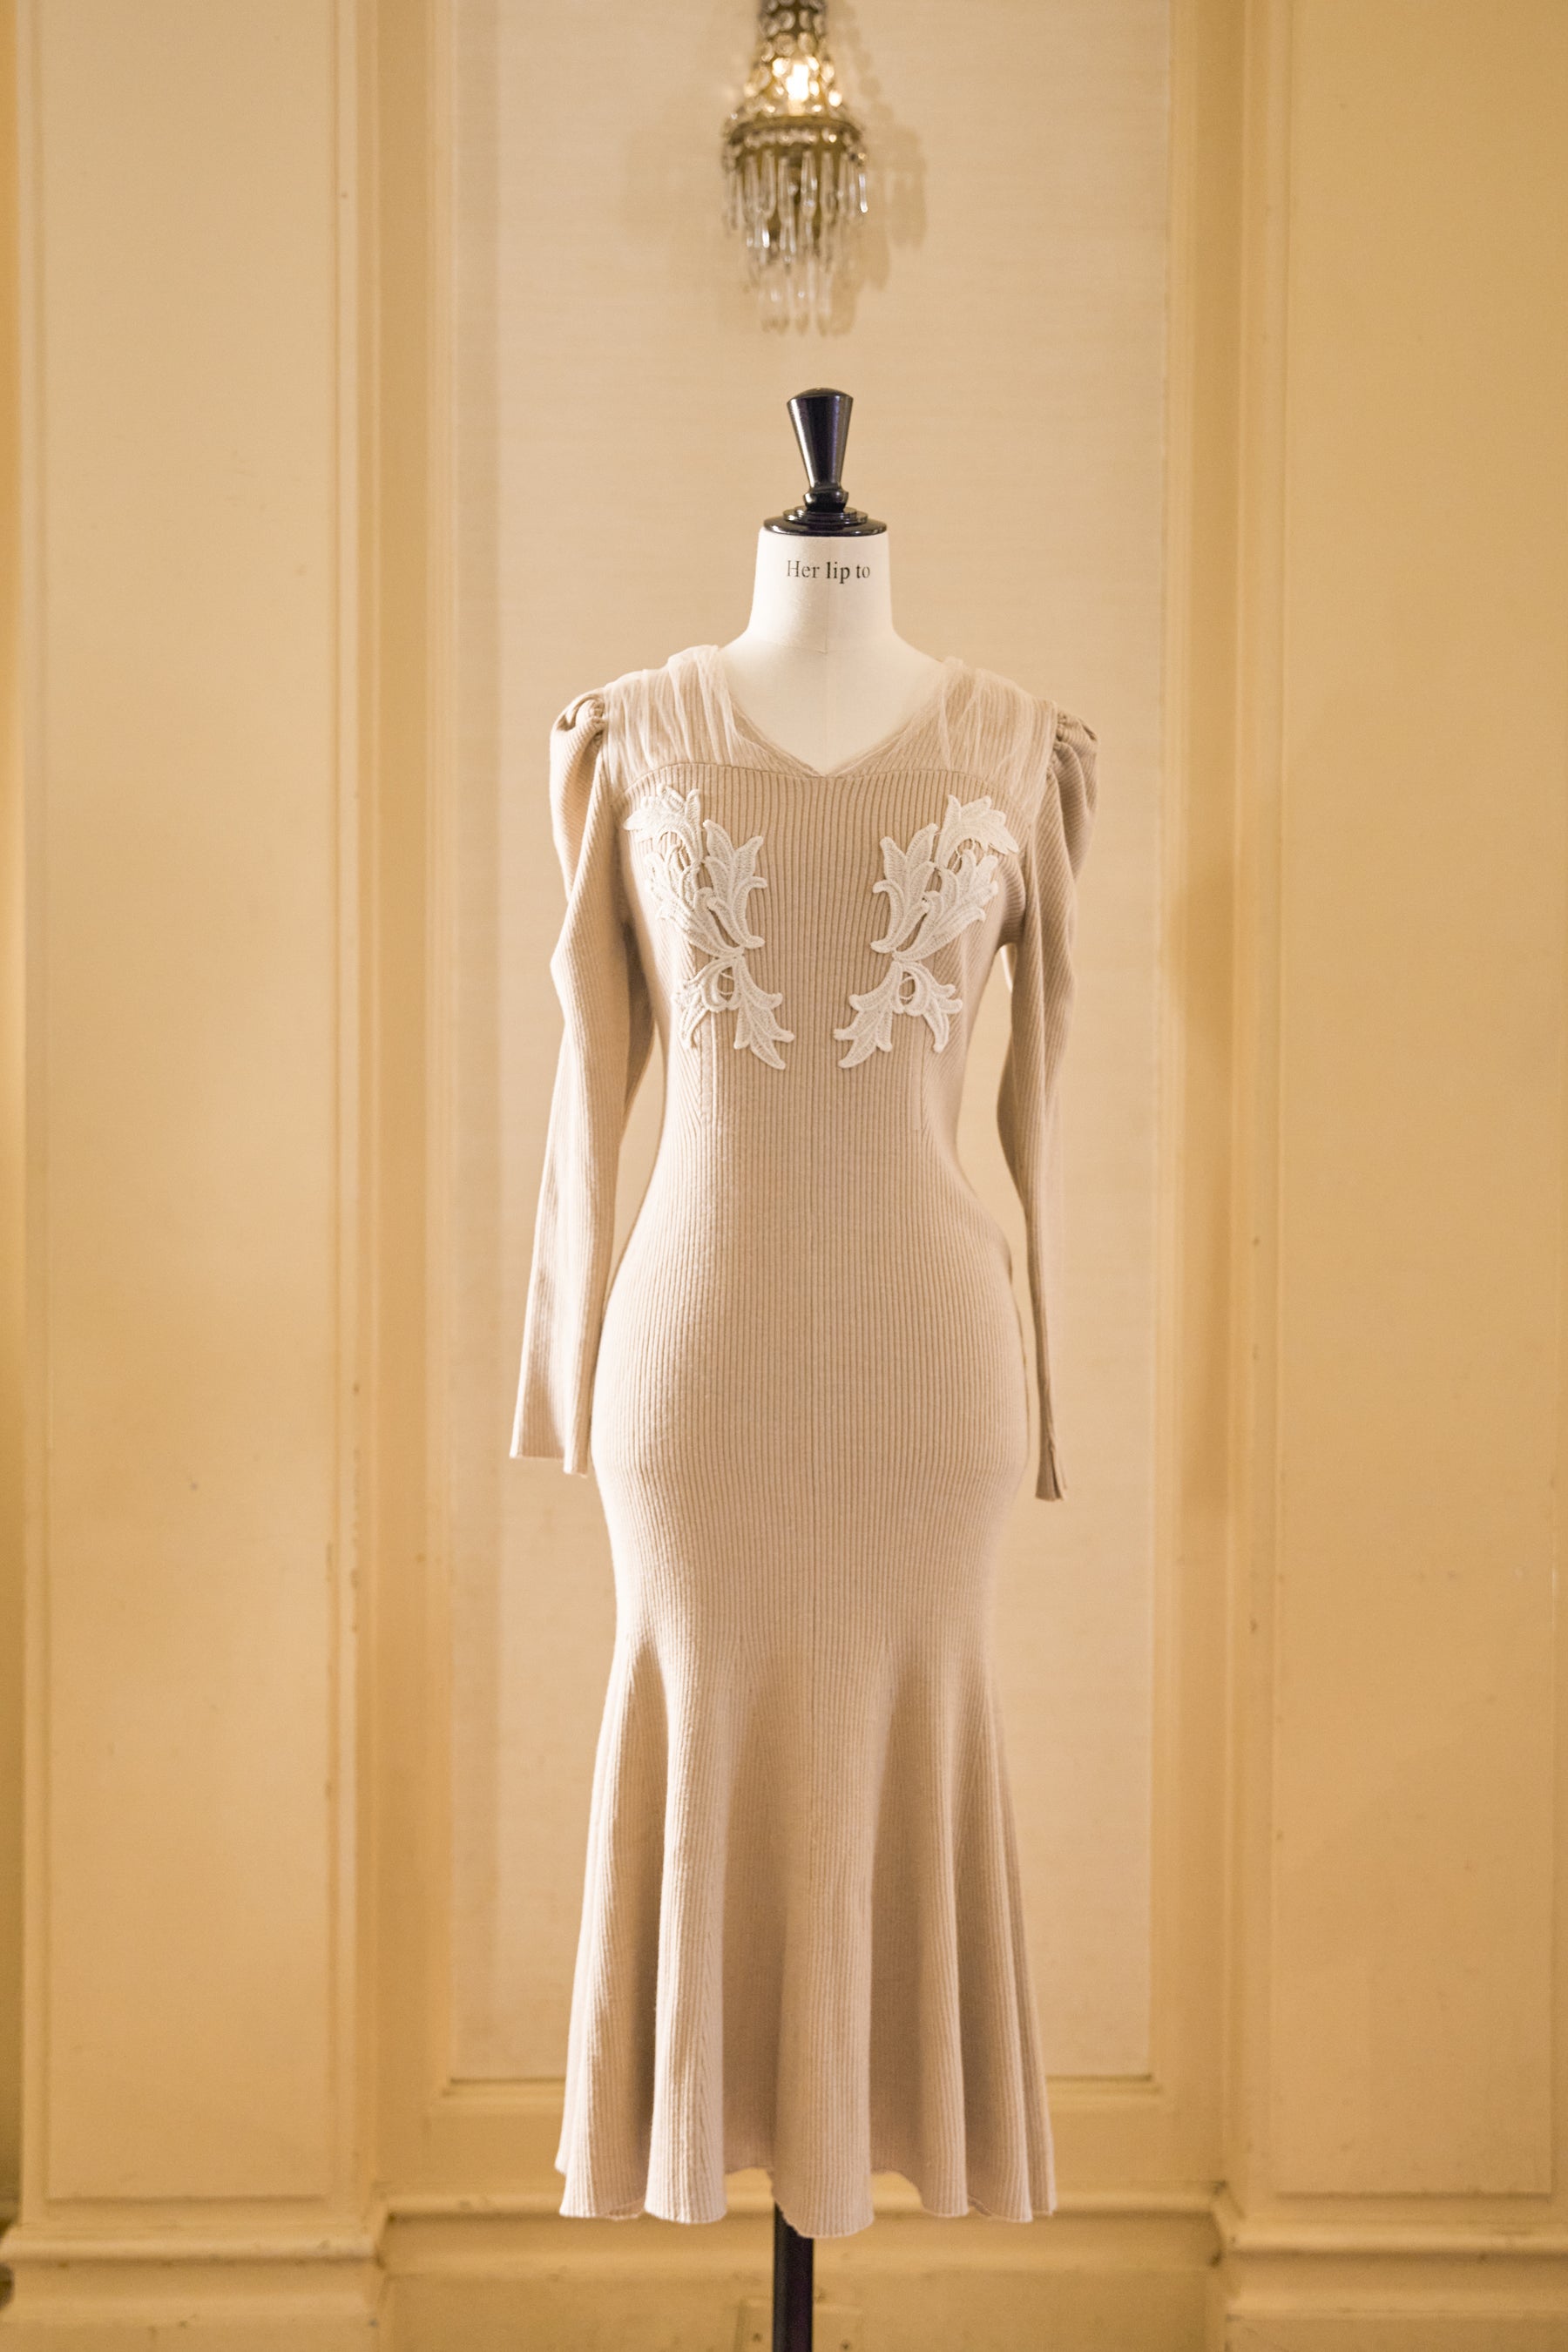 Herlipto Lily Lace Knit Midi Dress | labiela.com